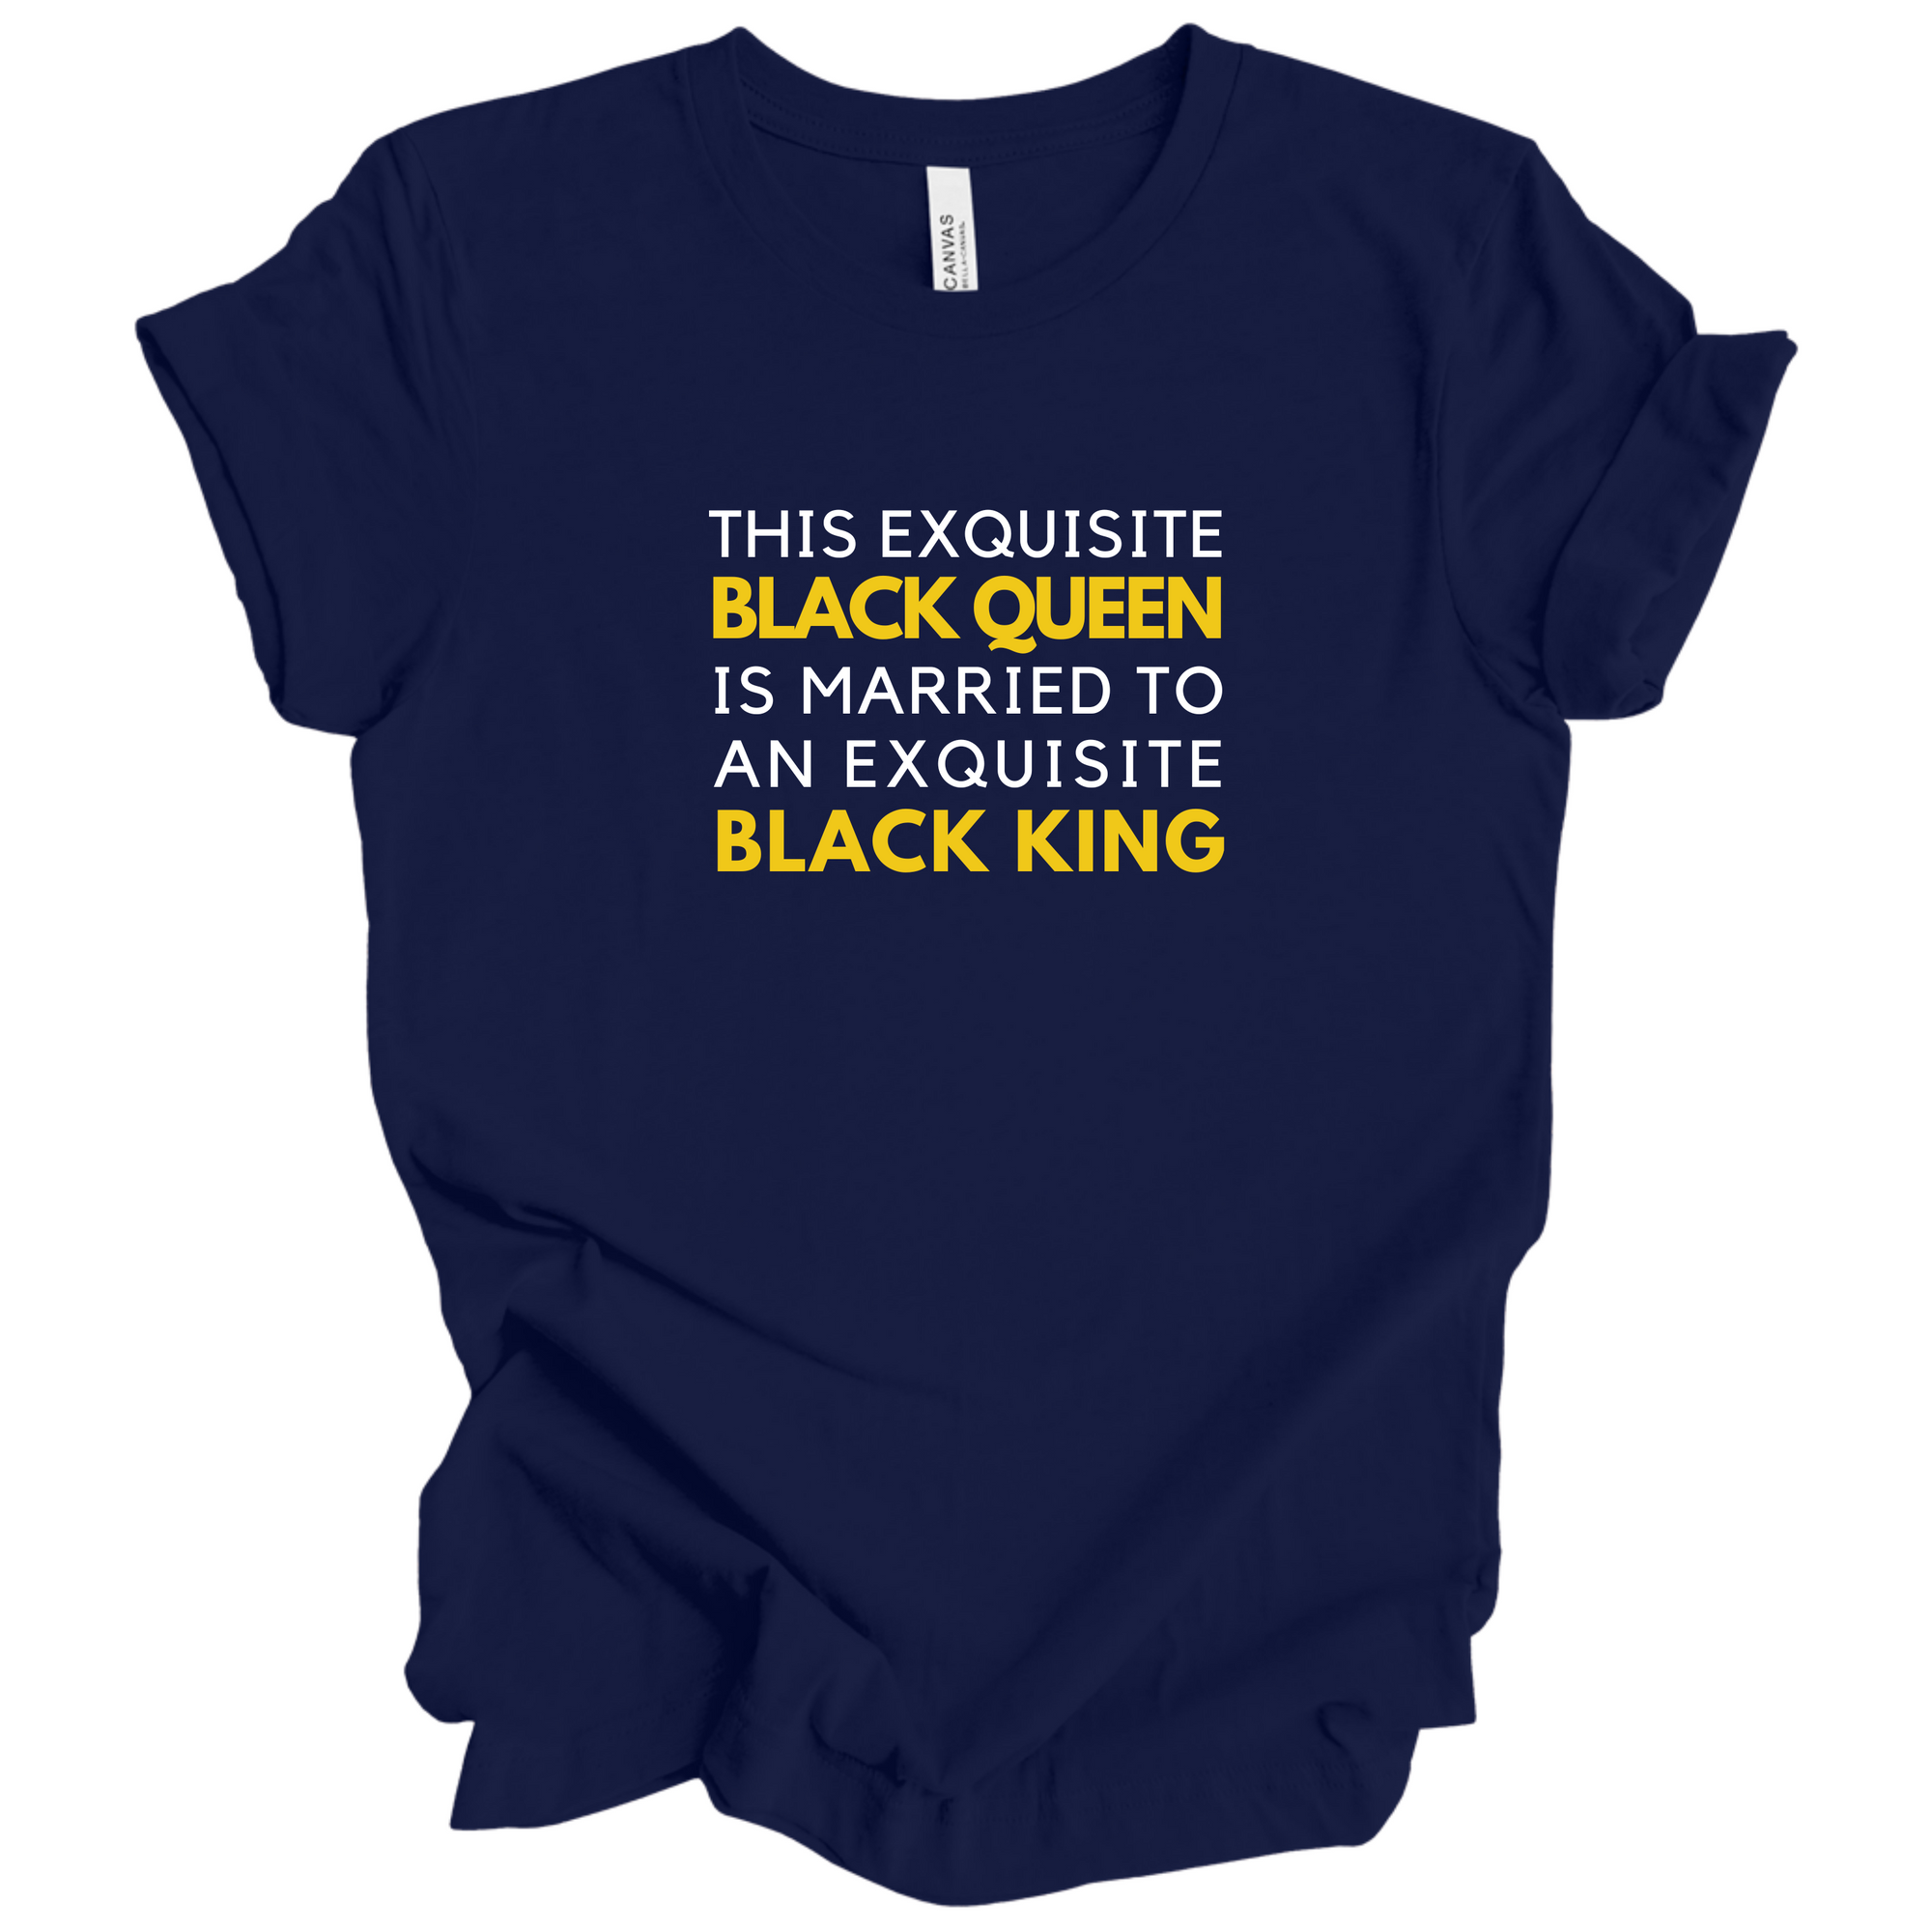 Exquisite Black Queen And Black King - Tee